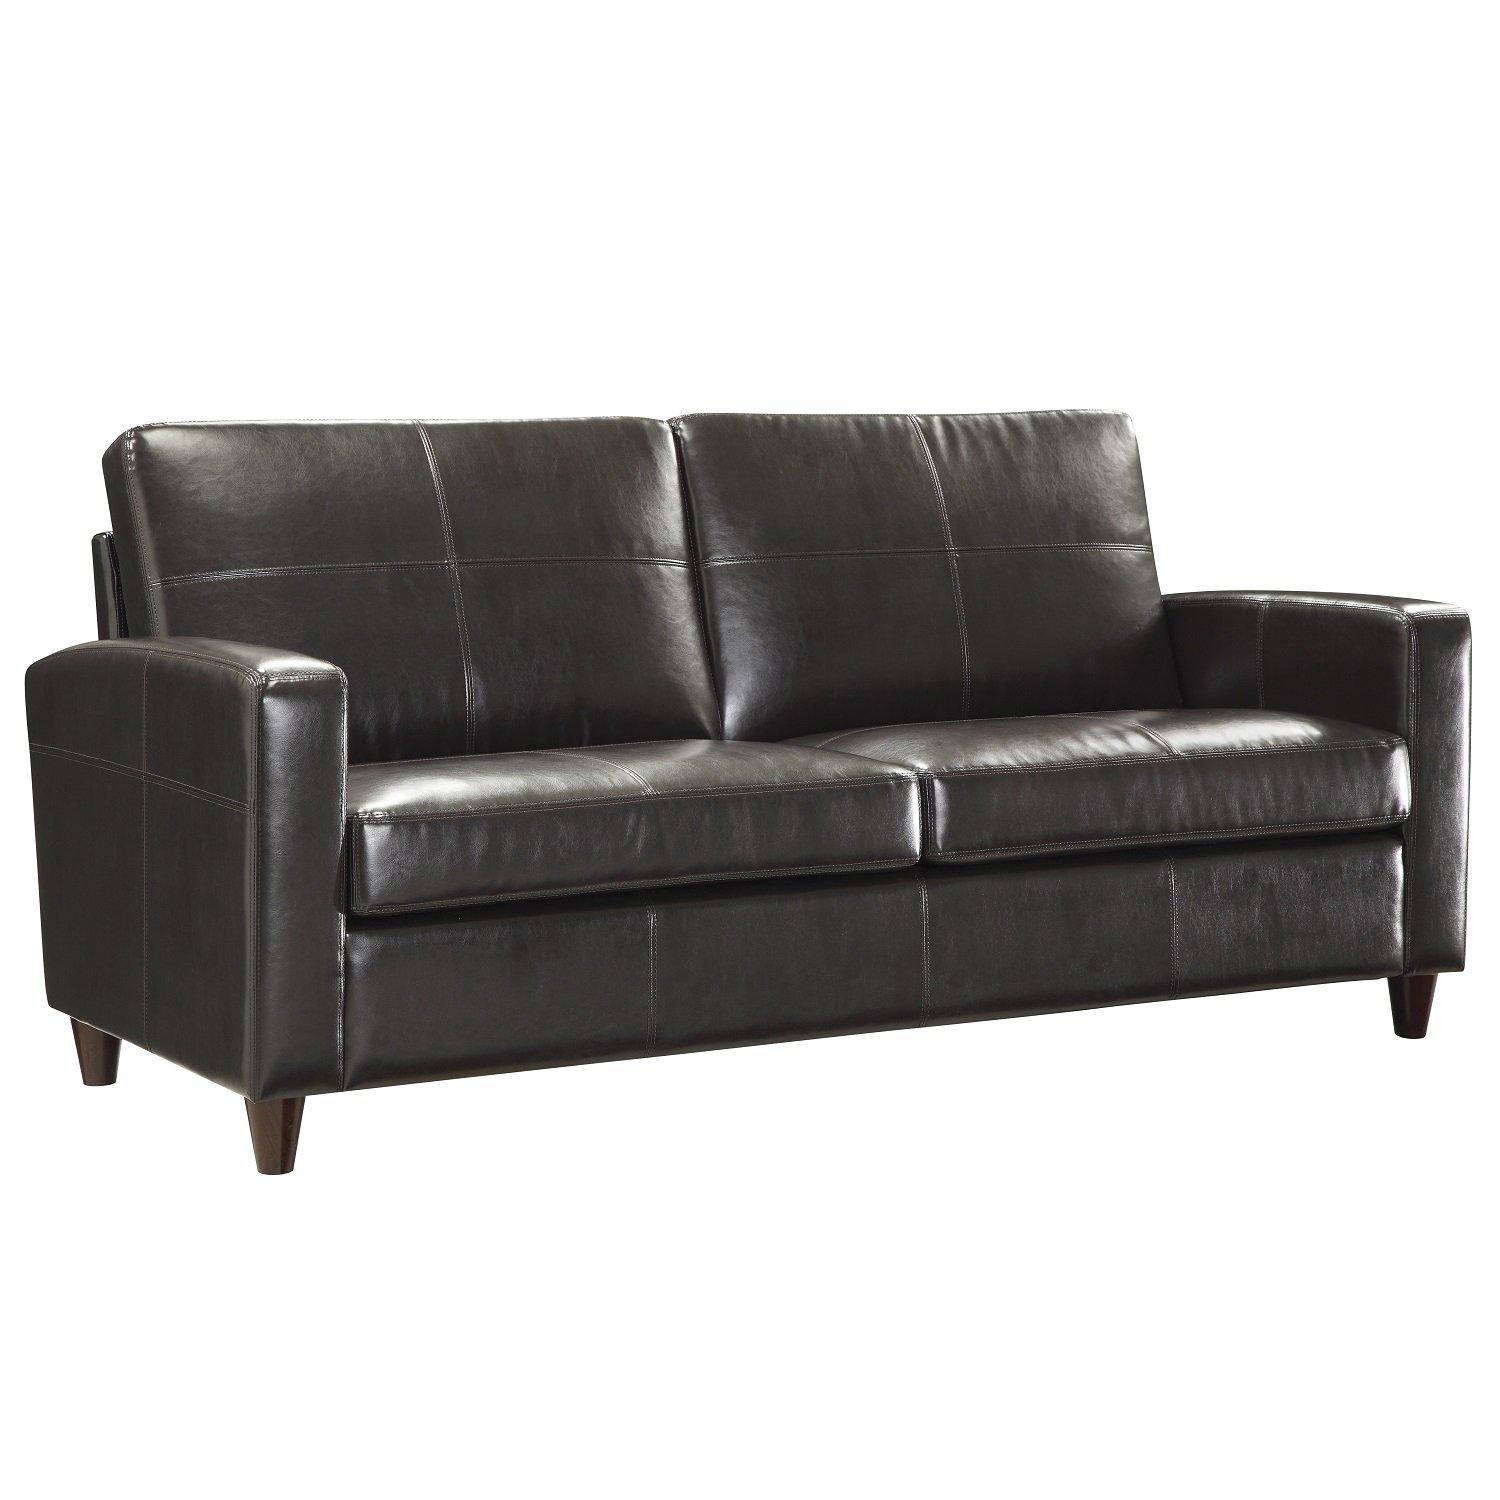 Bonded Leather Sofa With Espresso Finish Legs